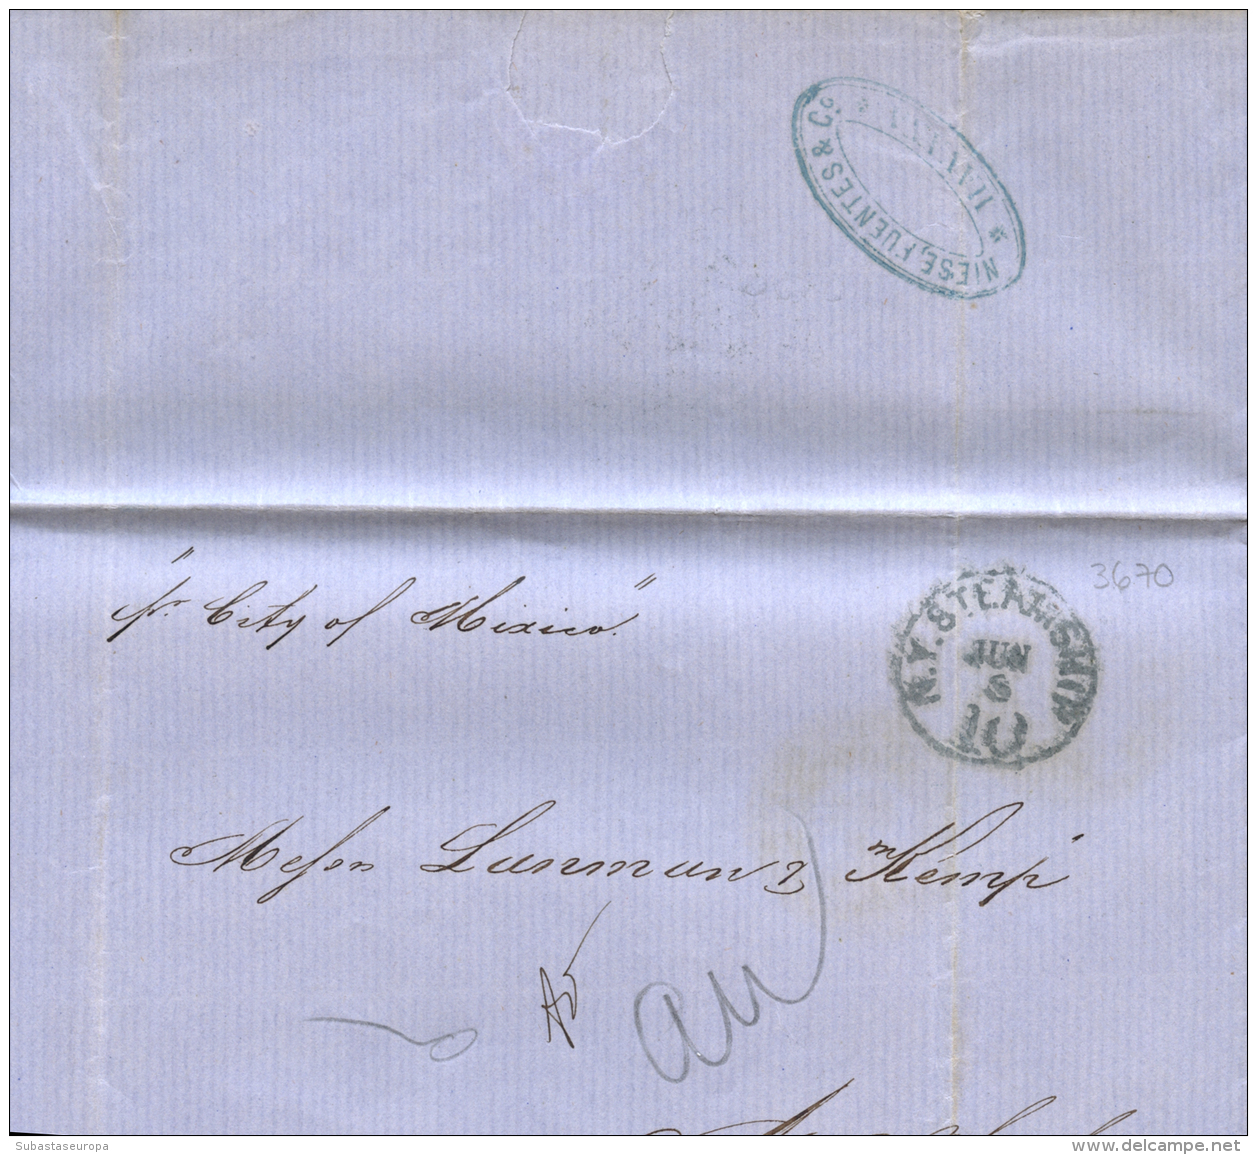 CUBA. 1871. Carta De Matanzas A New York. Matasello N.Y. Steamship/10 En Azul. Al Dorso Marca Del Encaminador... - Cuba (1874-1898)